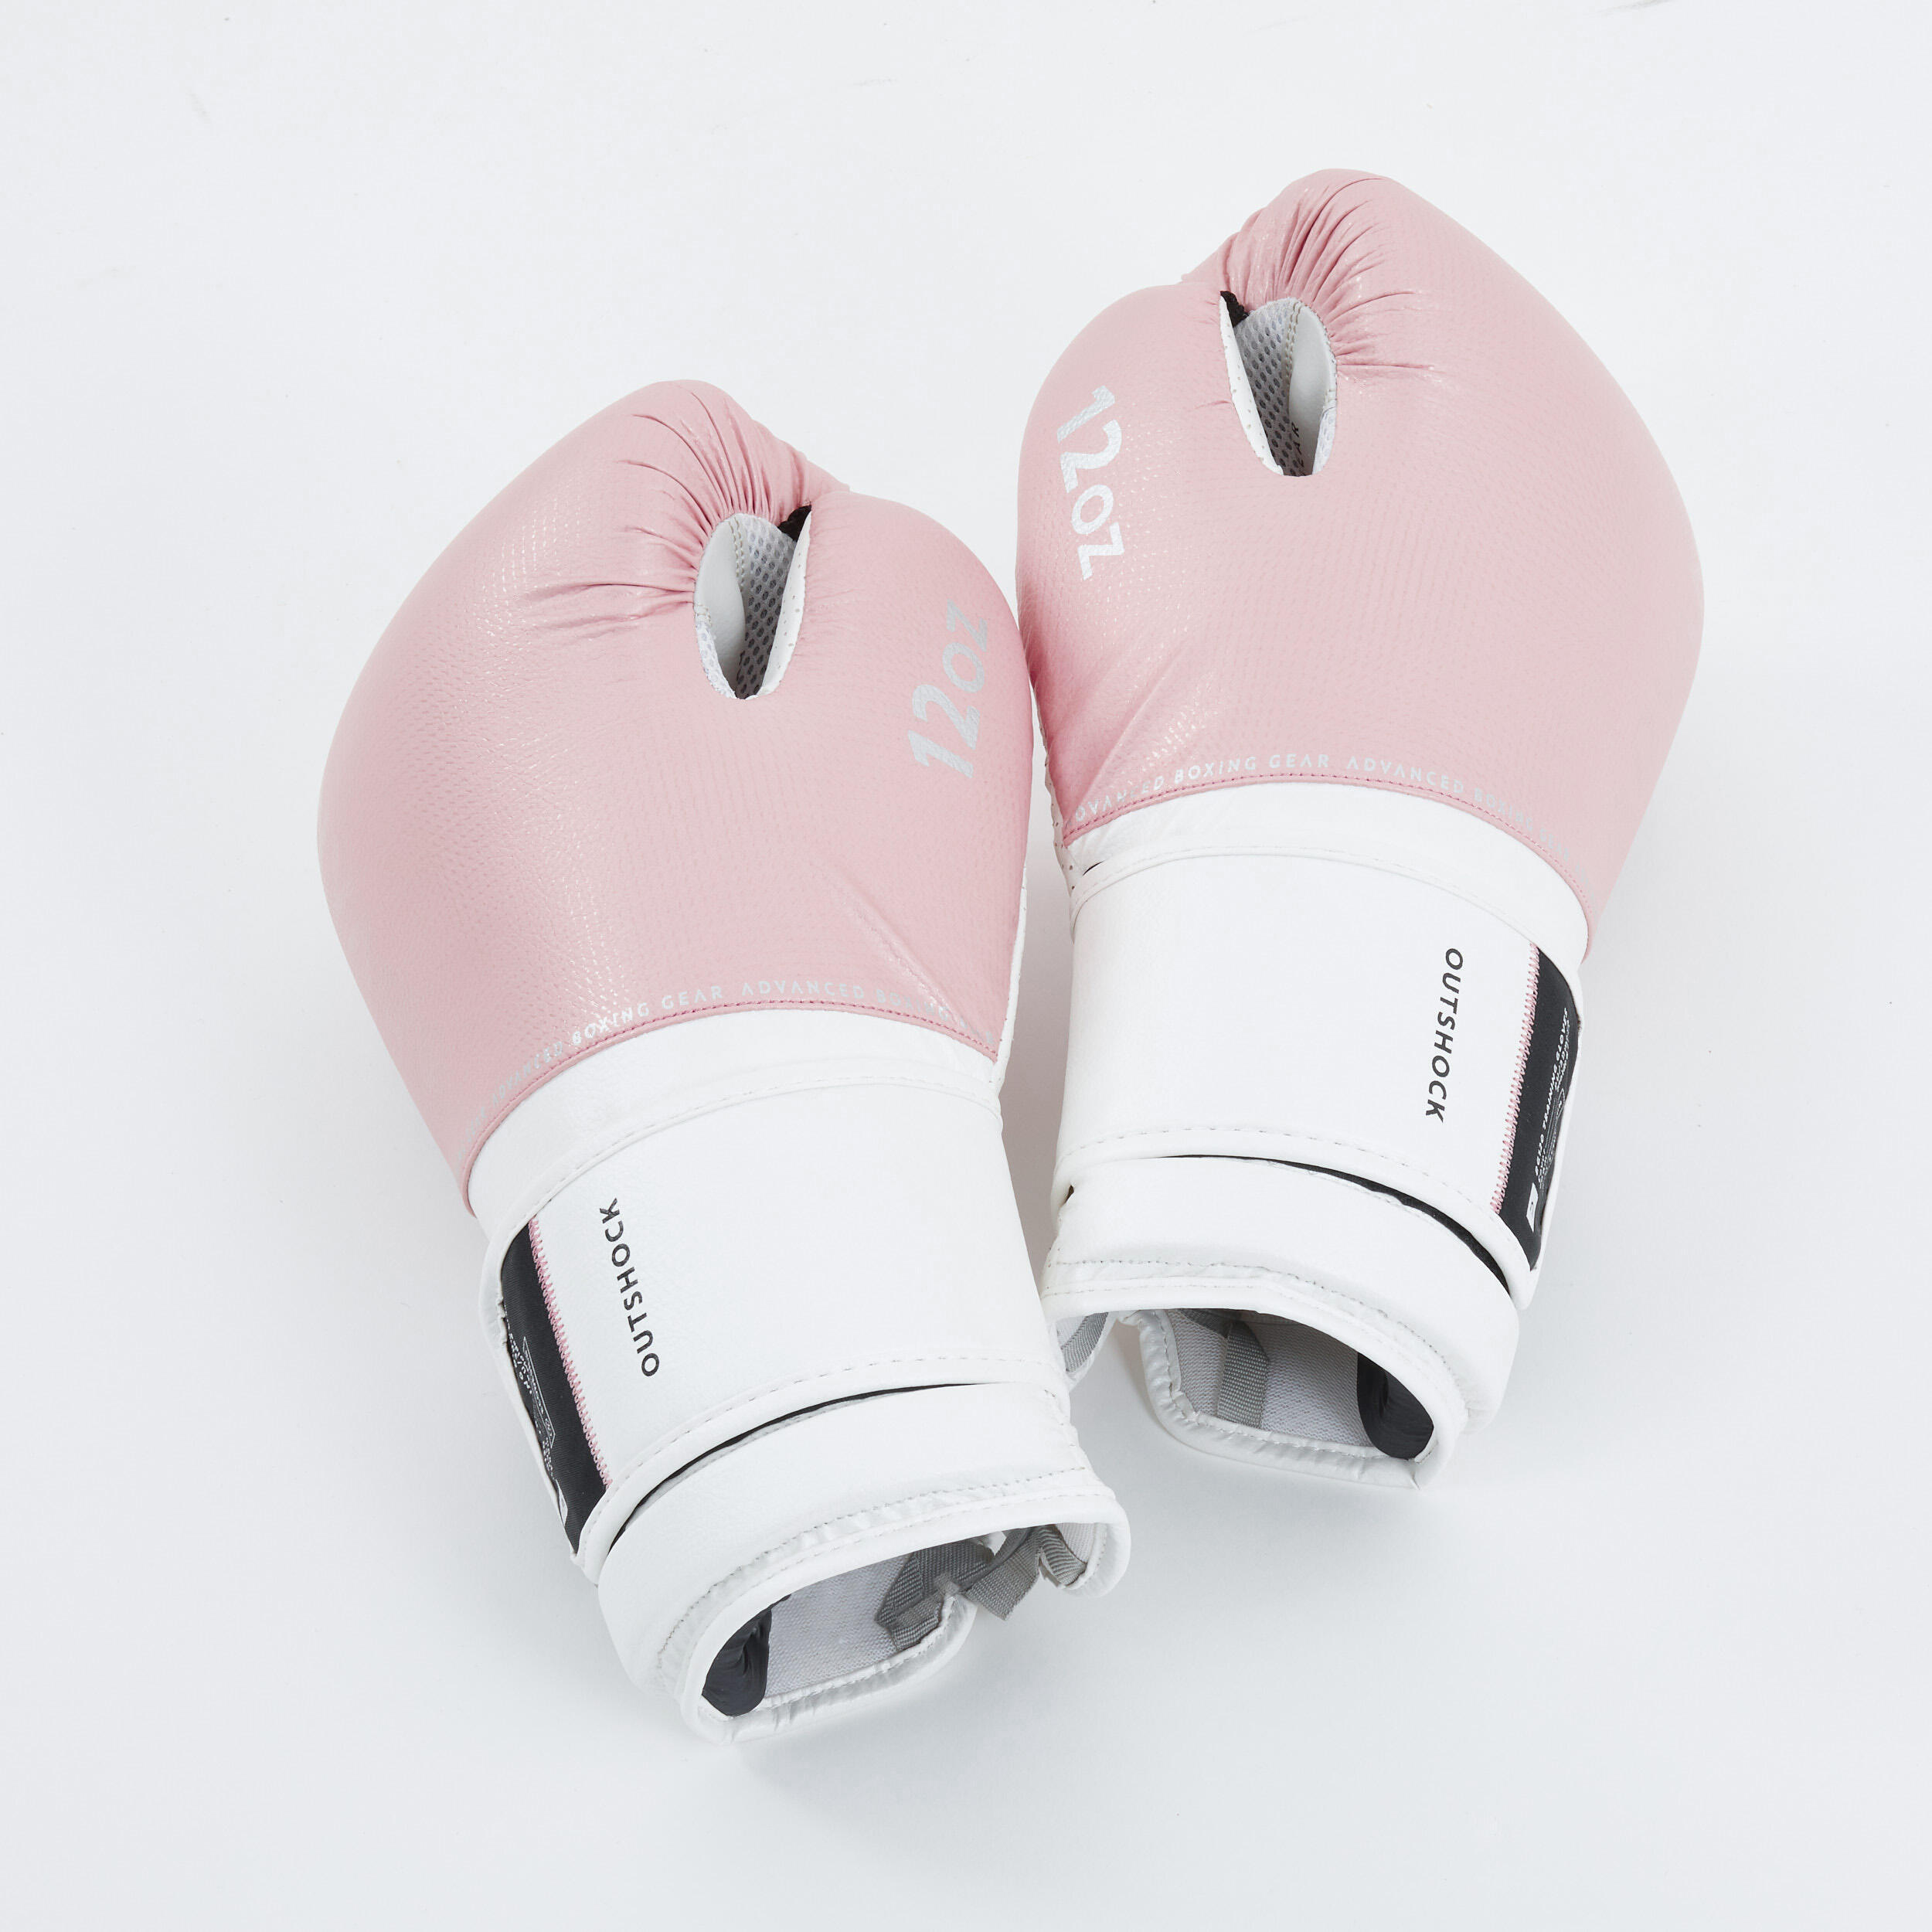 Ergonomic Boxing Gloves 120 - Pink 2/6